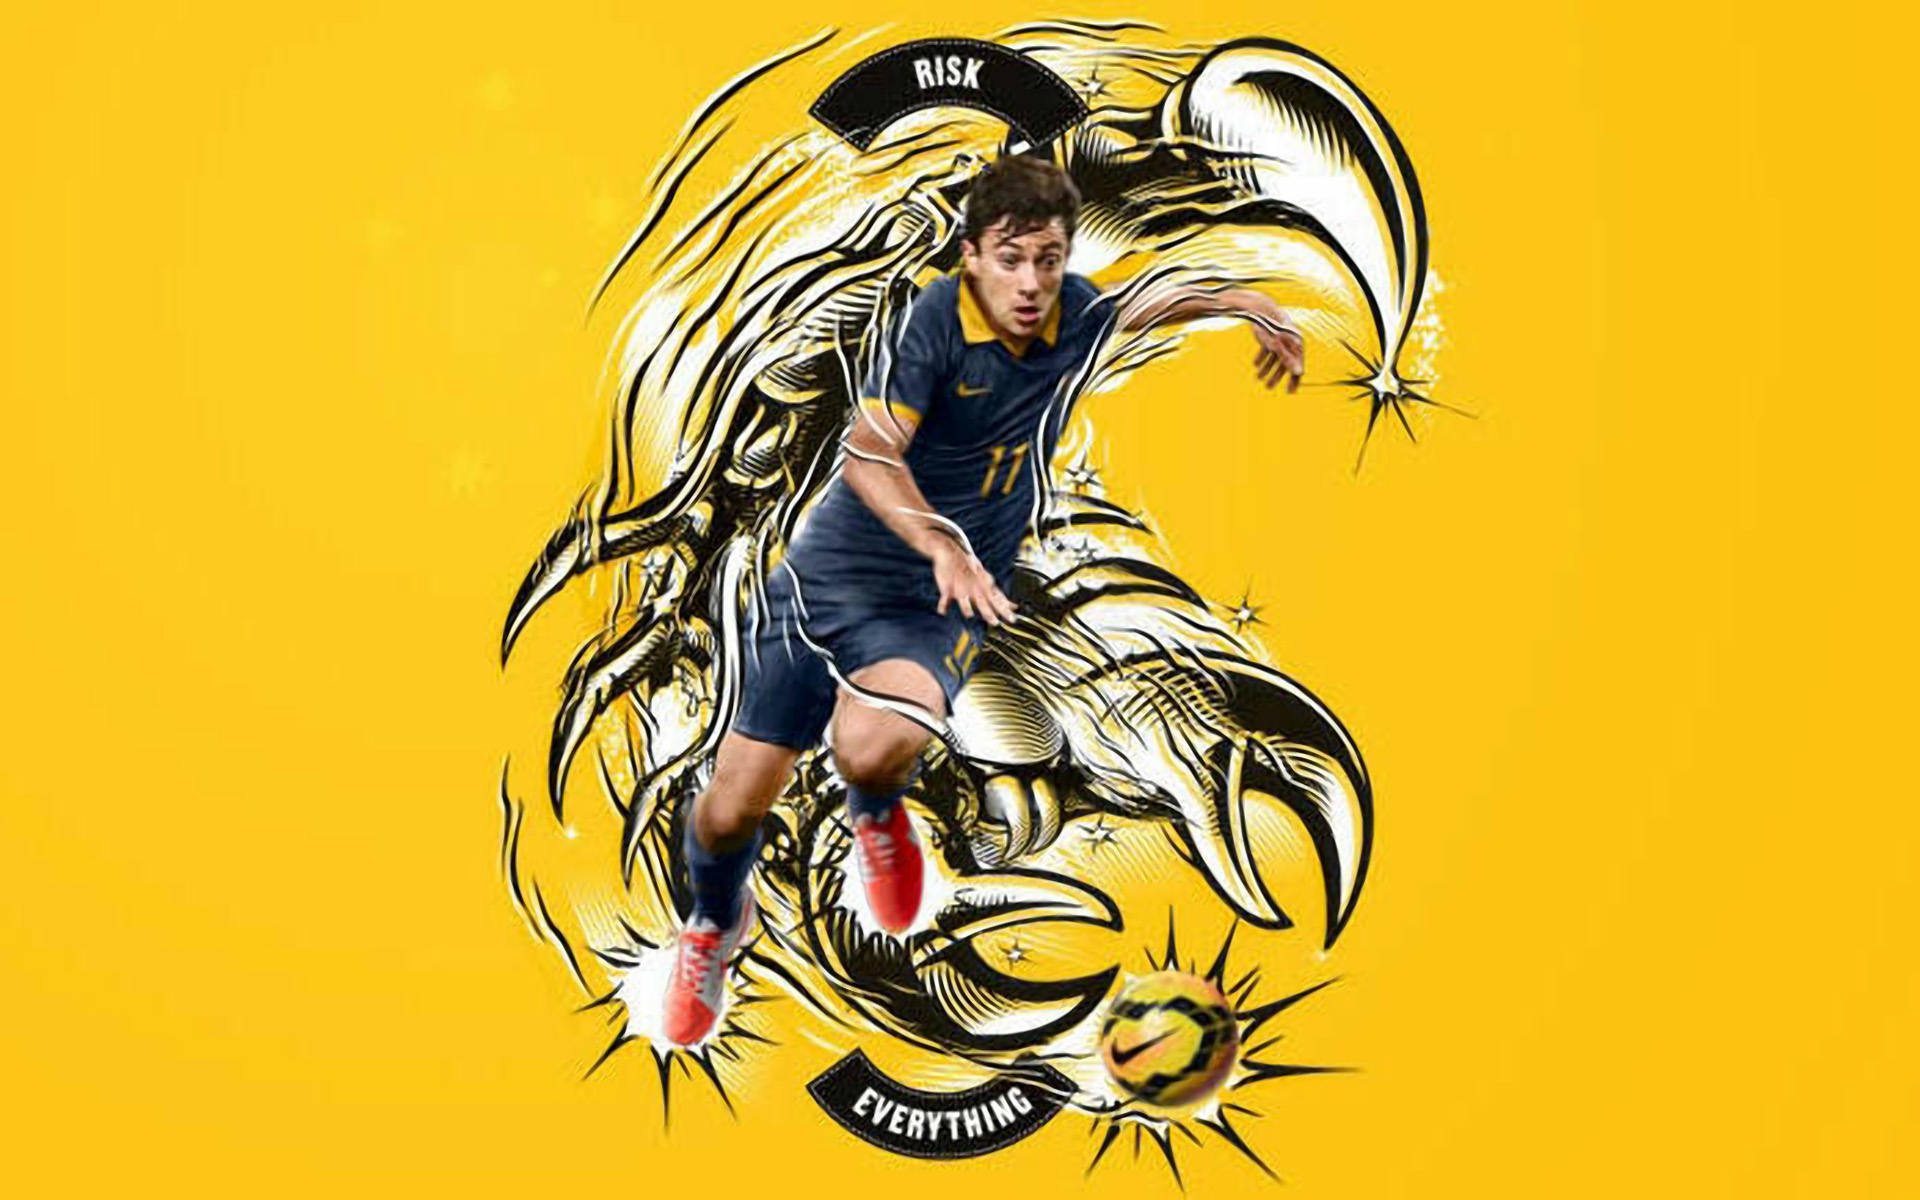 Nike Risk Everything Neymar - HD Wallpaper 